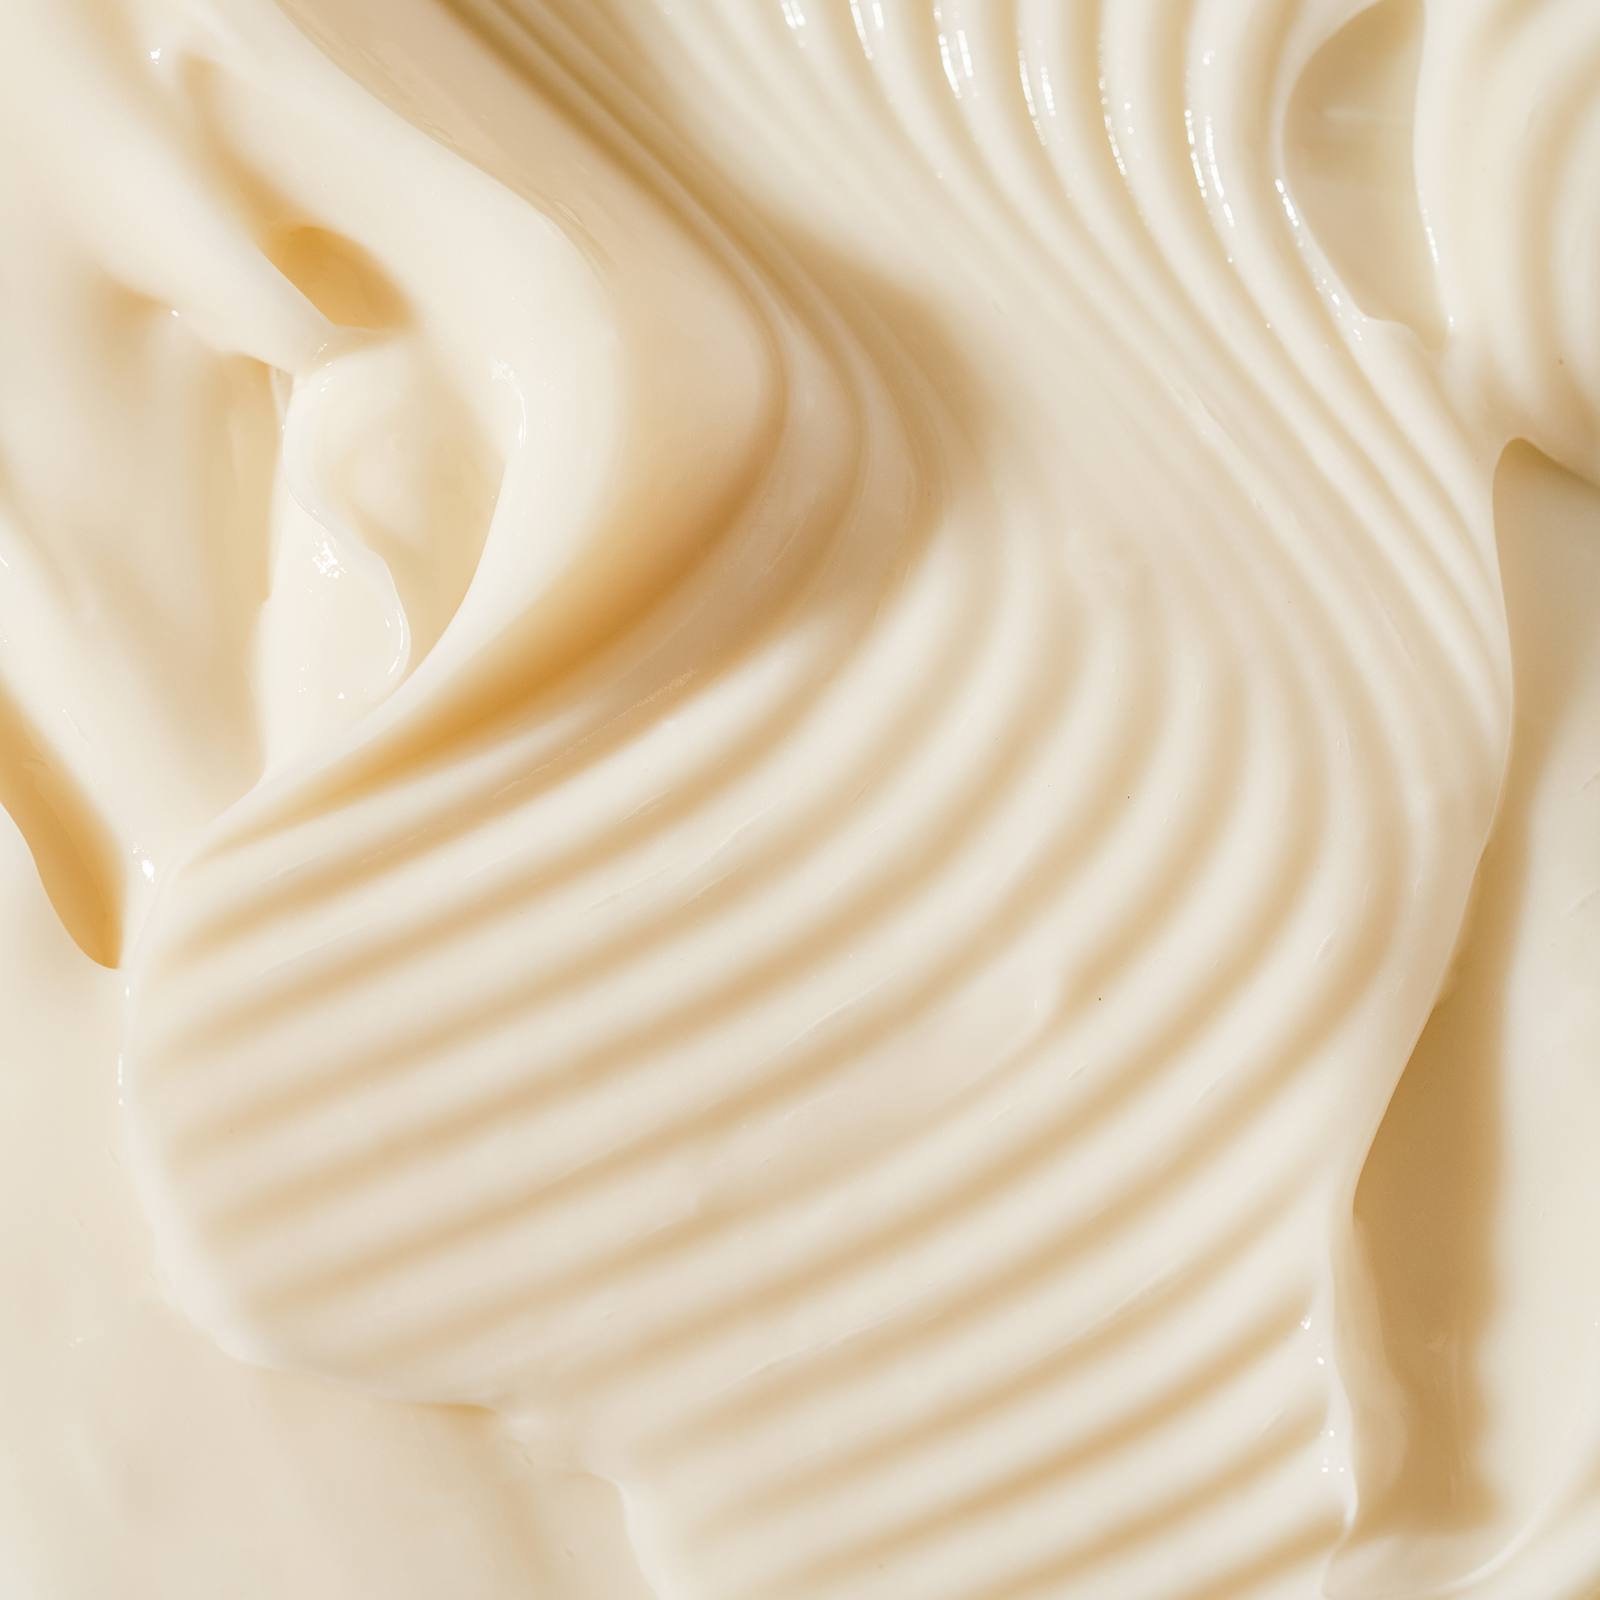 baomint moisturizing curl defining cream